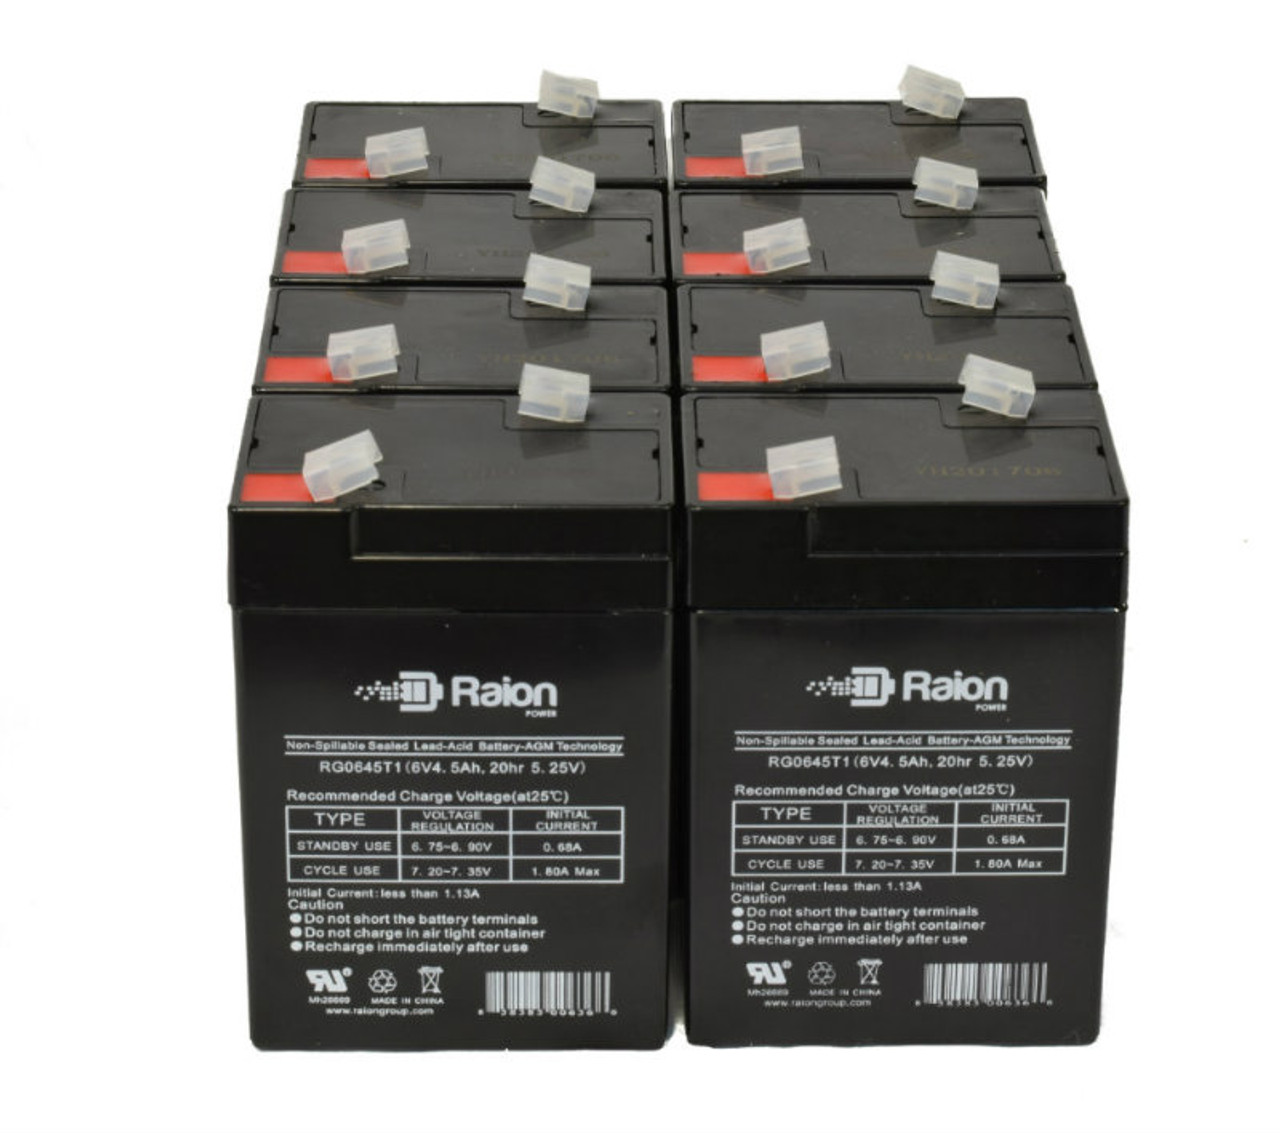 Raion Power 6 Volt 4.5Ah RG0645T1 Replacement Battery for Dongjin DJ6-5.0 - 8 Pack